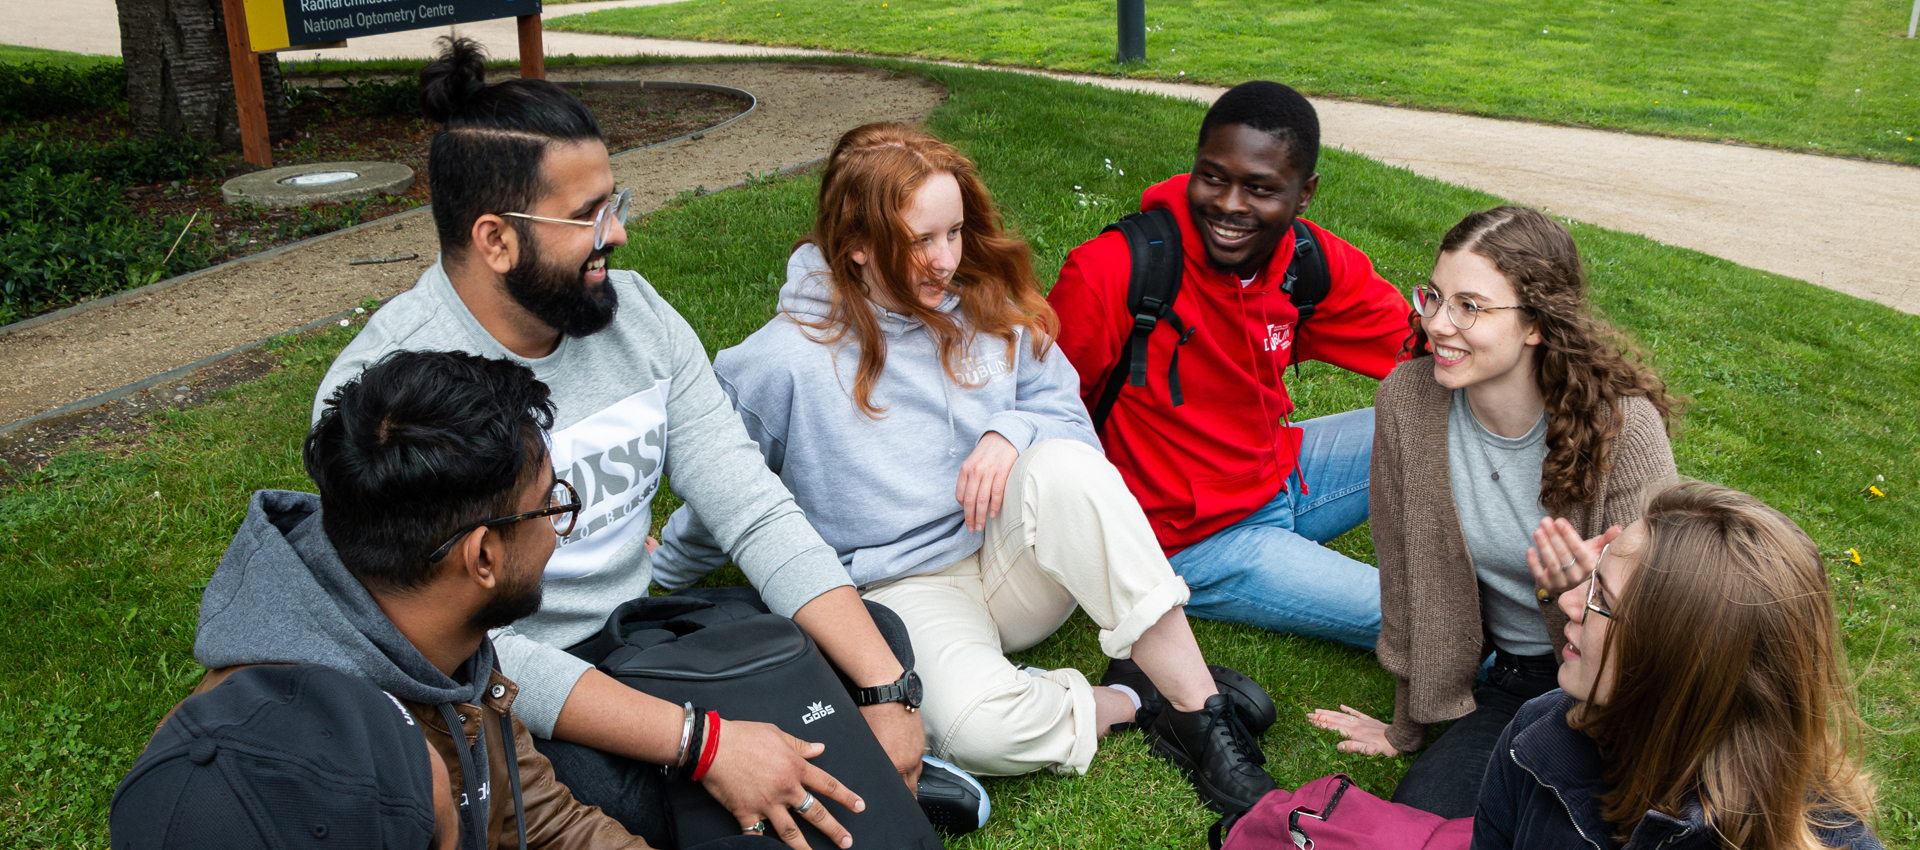 international students sitting on grass on grangegorman campus
